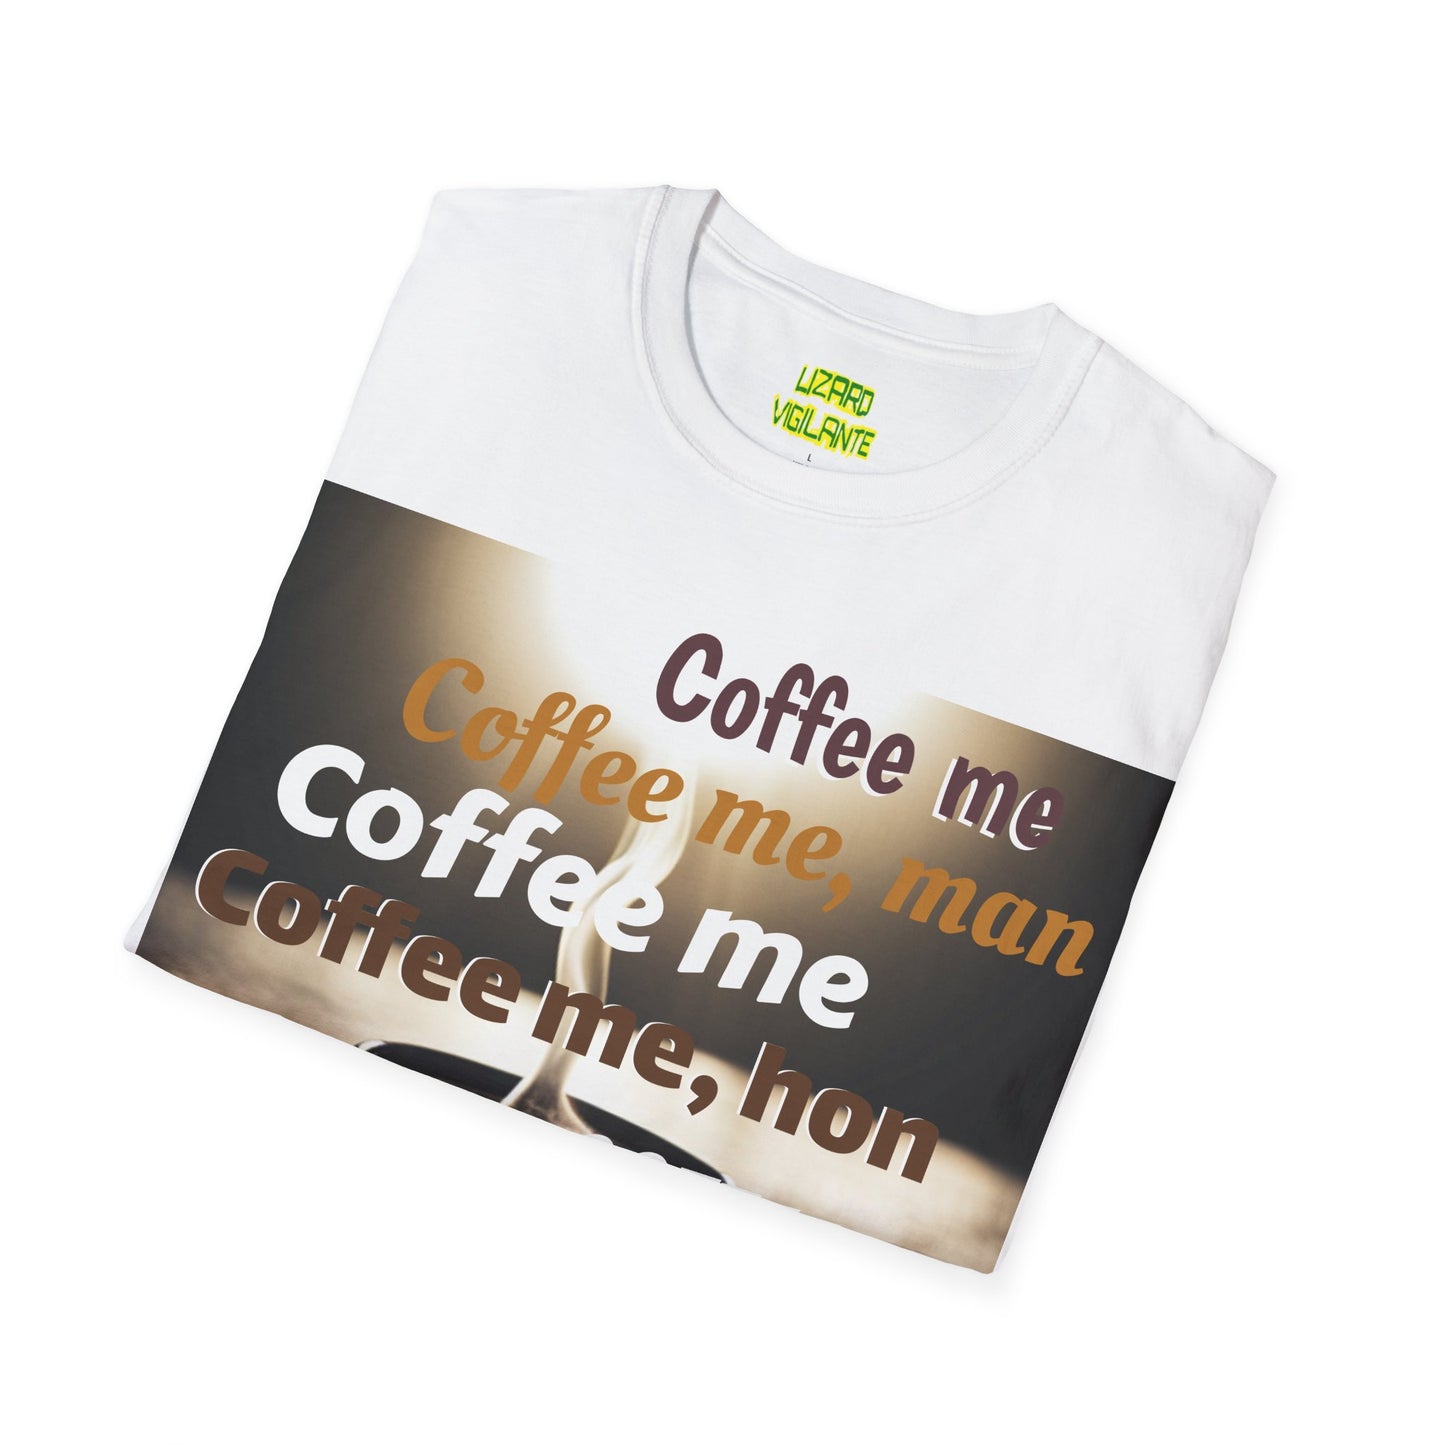 Coffee Me Unisex Softstyle T-Shirt - Lizard Vigilante